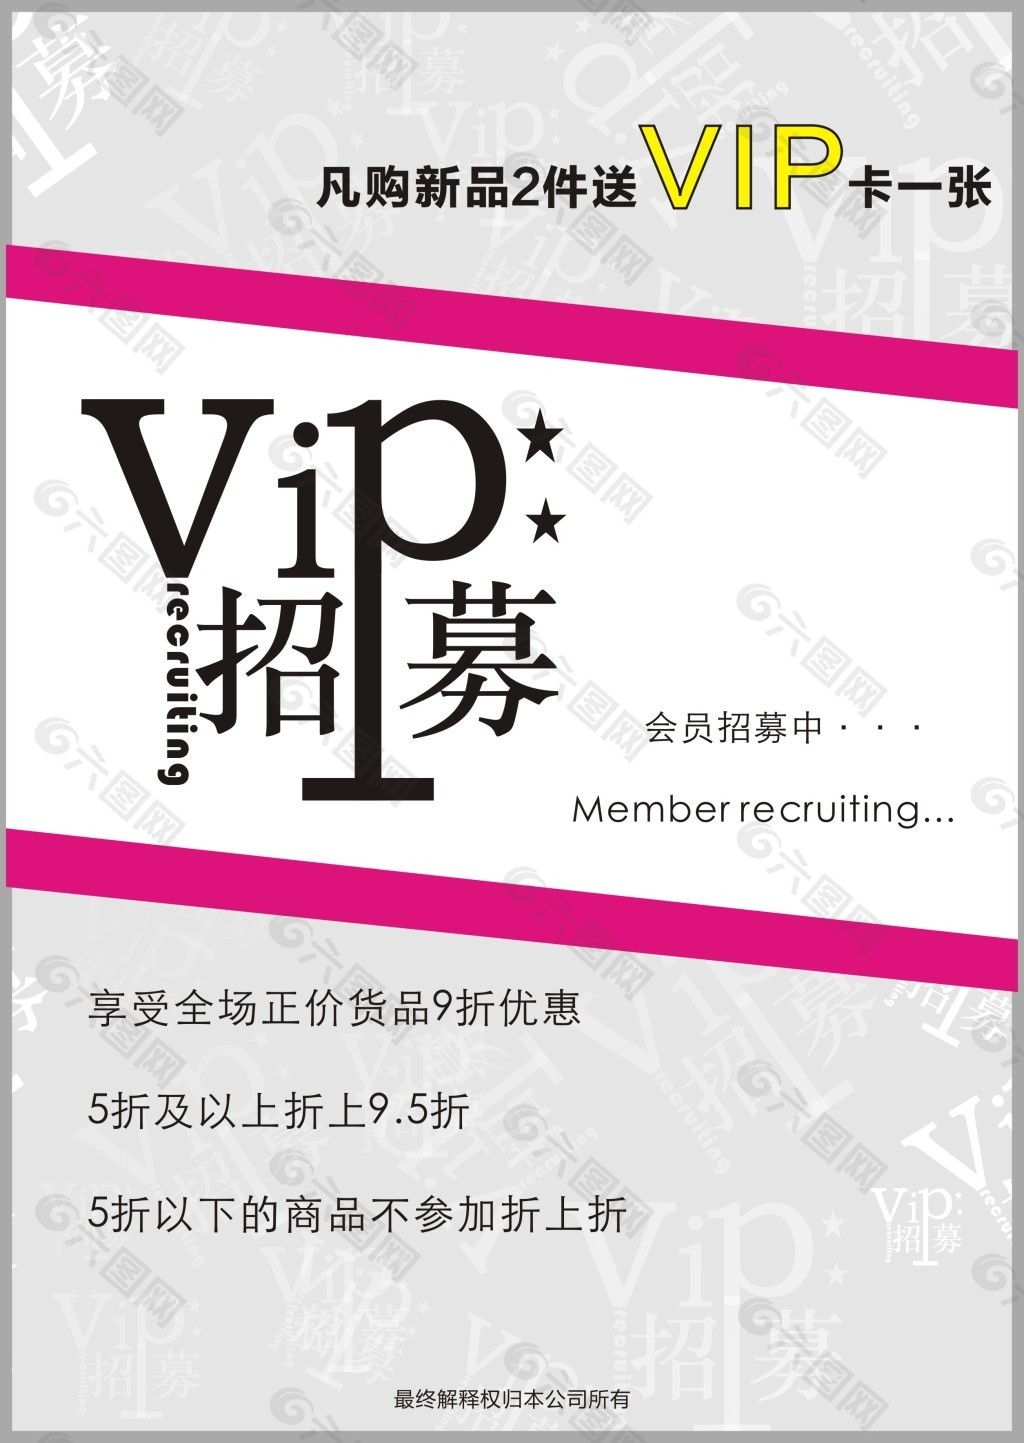 VIP招募海报